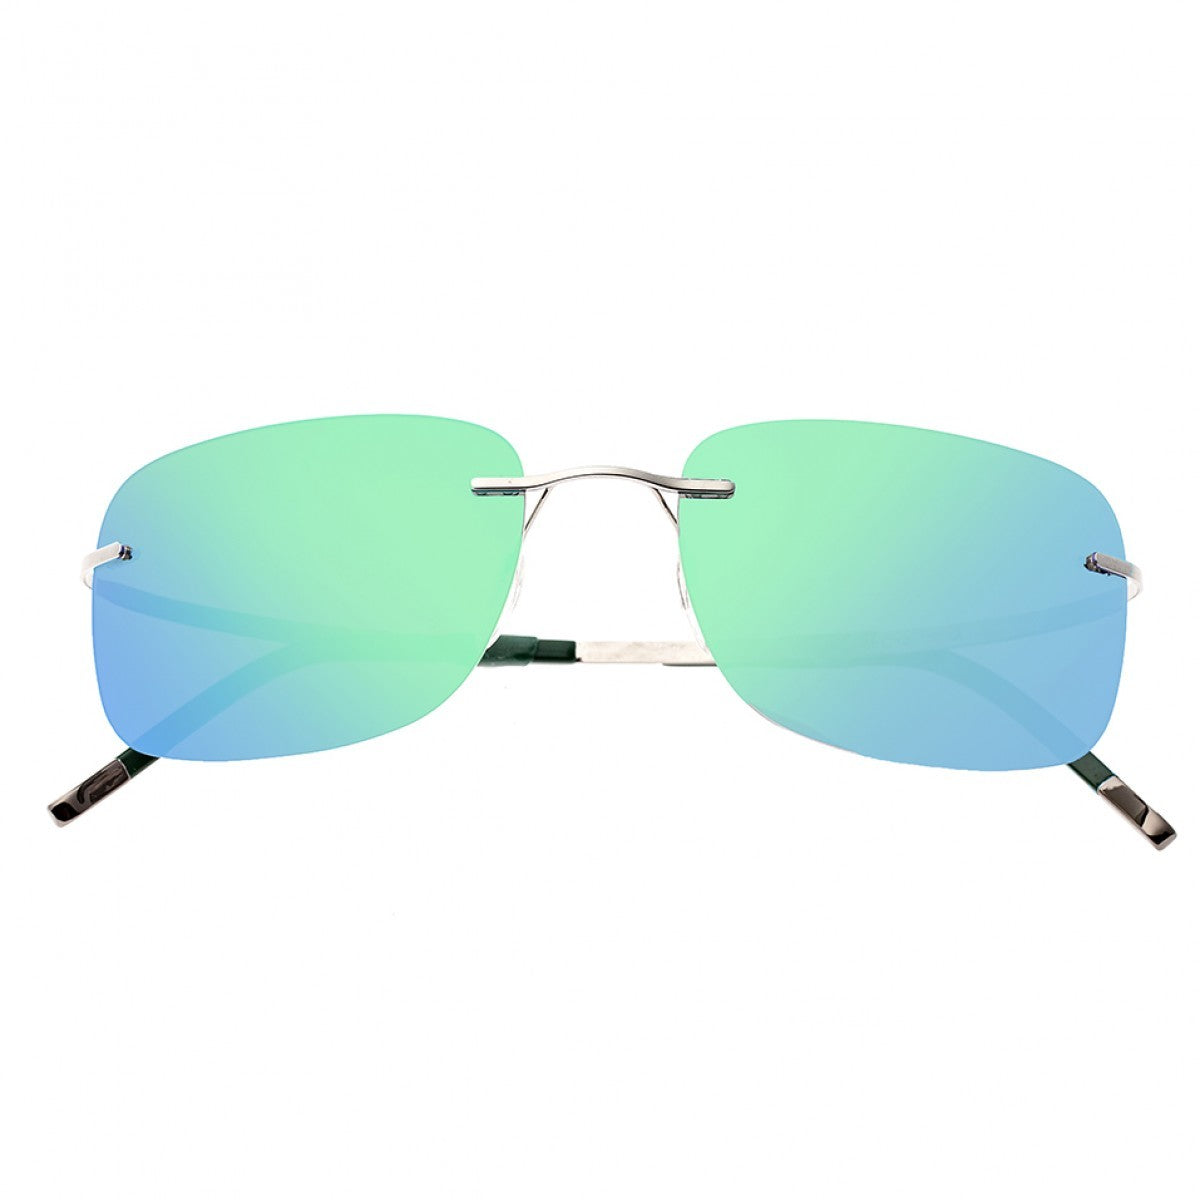 Breed Orbit Titanium Polarized Sunglasses - Gunmetal/Blue-Green - BSG042GM